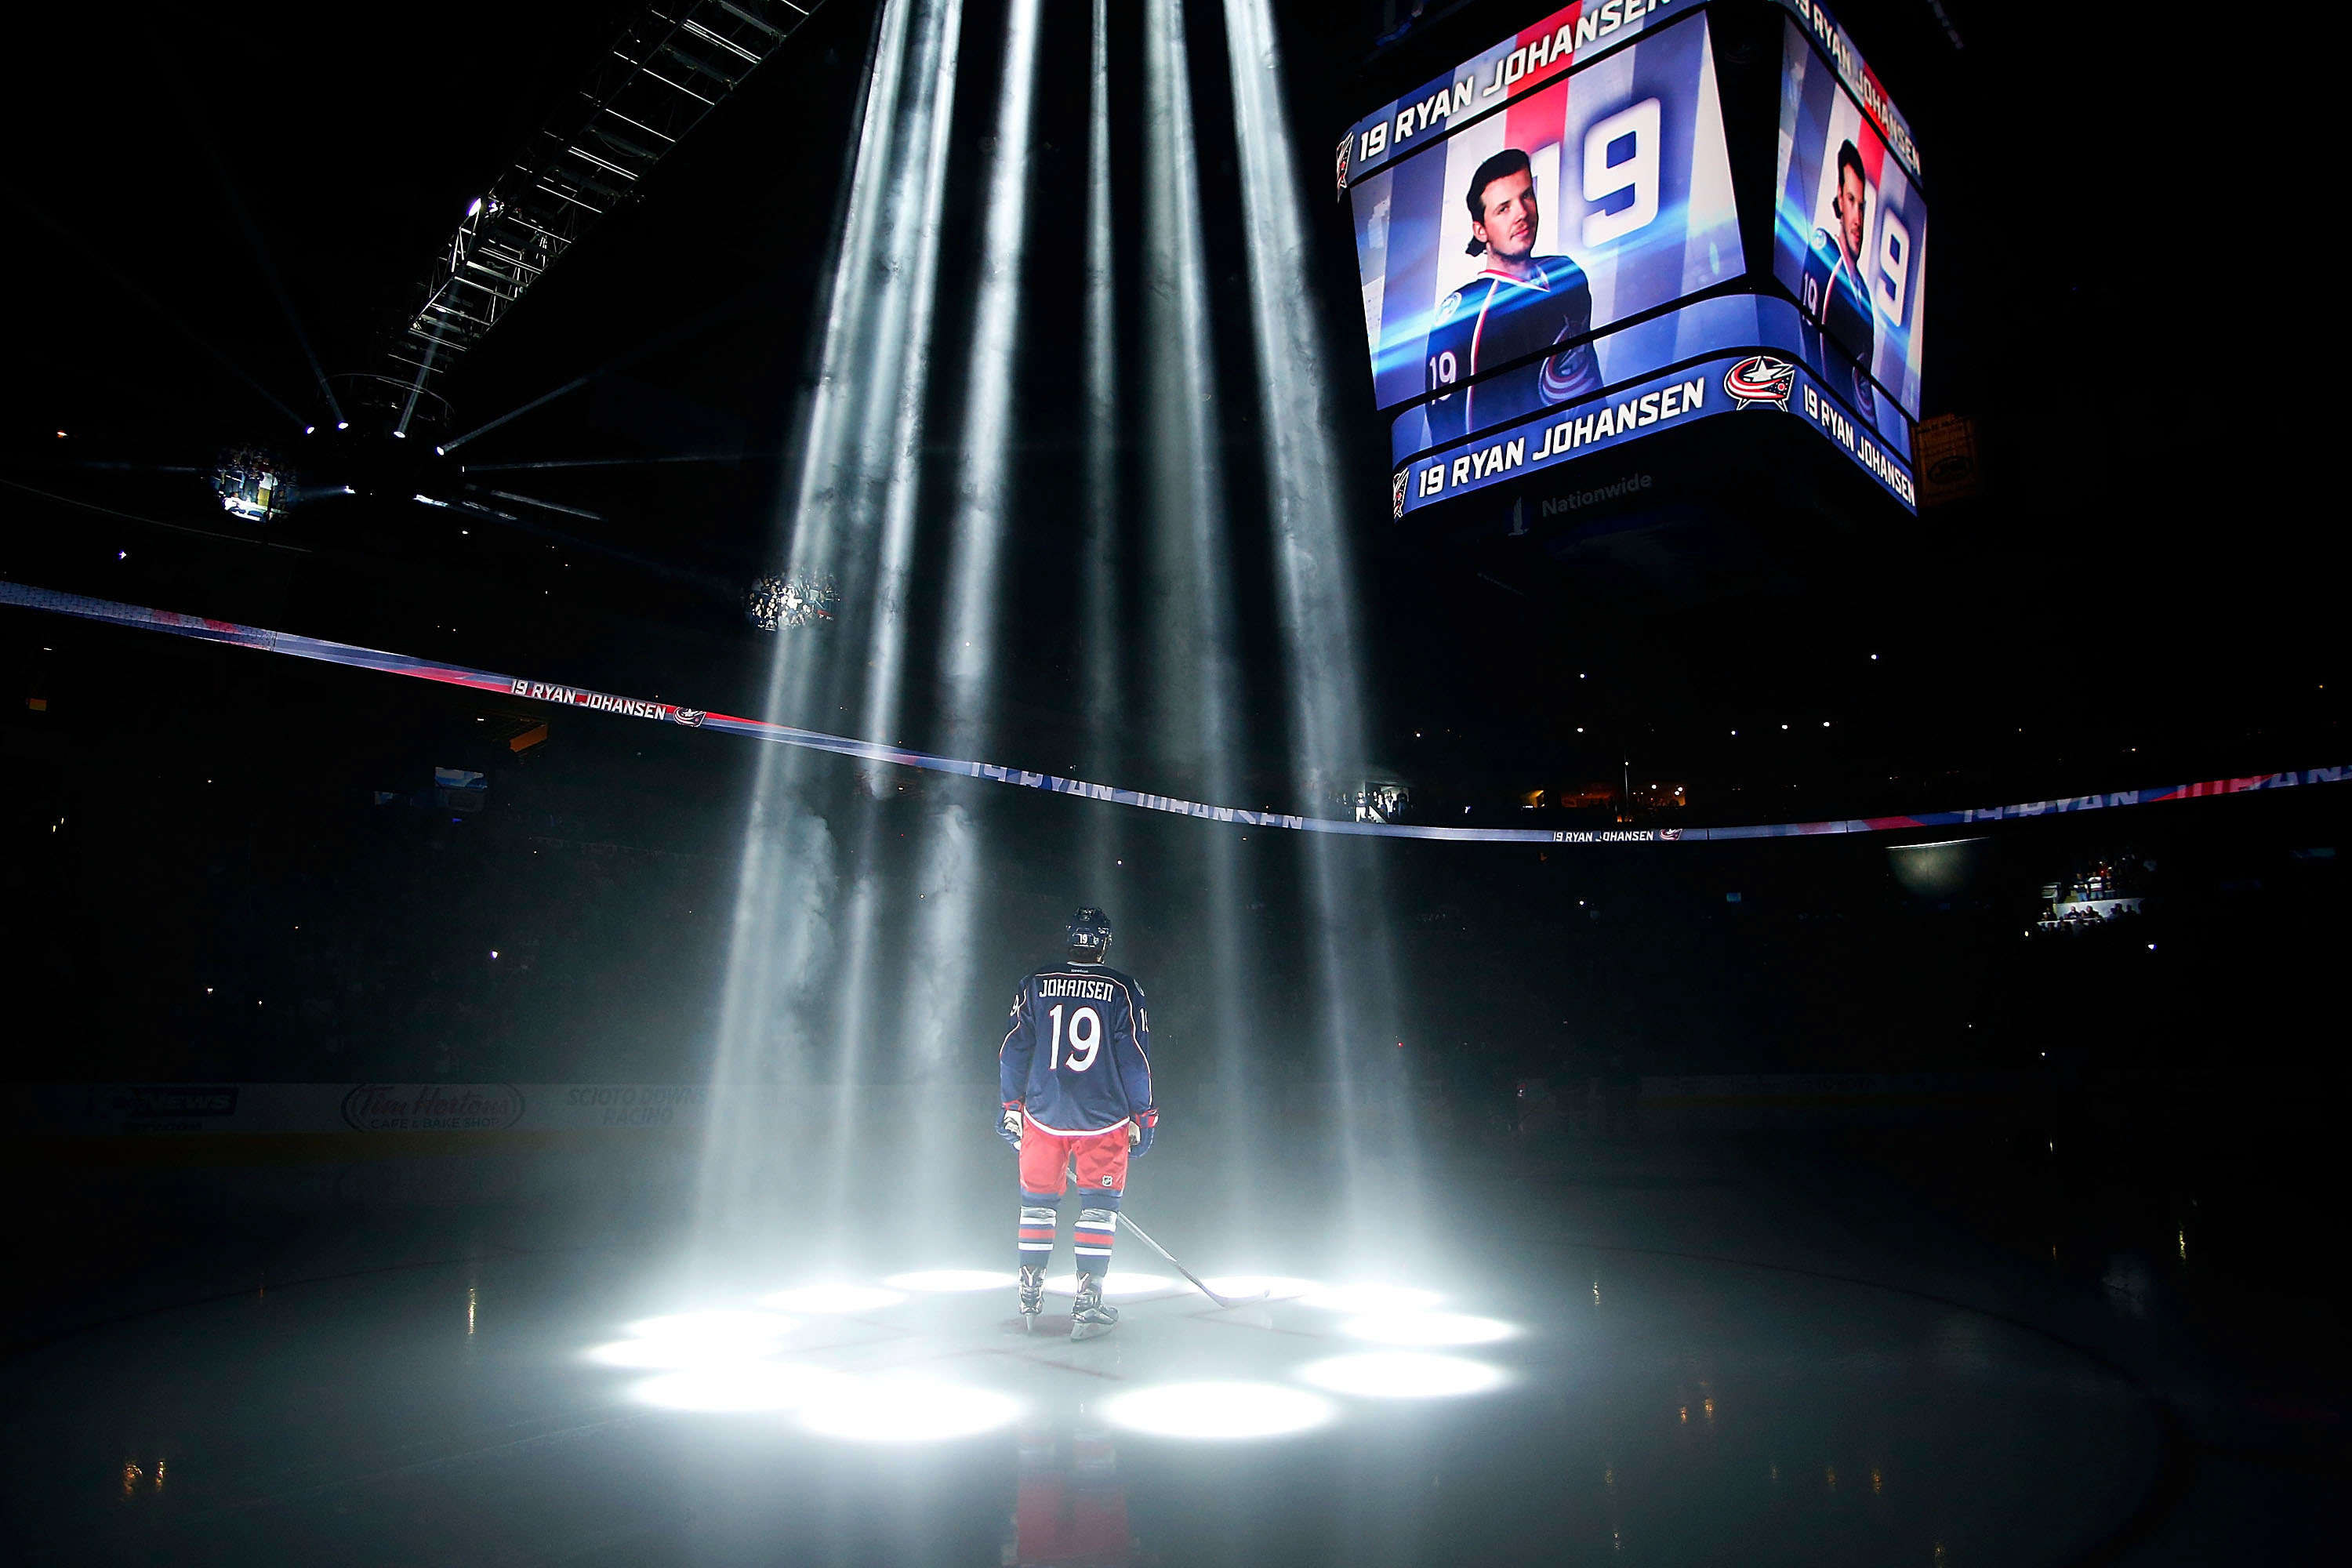 Columbus Bluejackets' Ryan Johansen is illuminated by spotlights before an NHL hockey game against the New York Rangers on Oct. 9, 2015 in Columbus, Ohio.